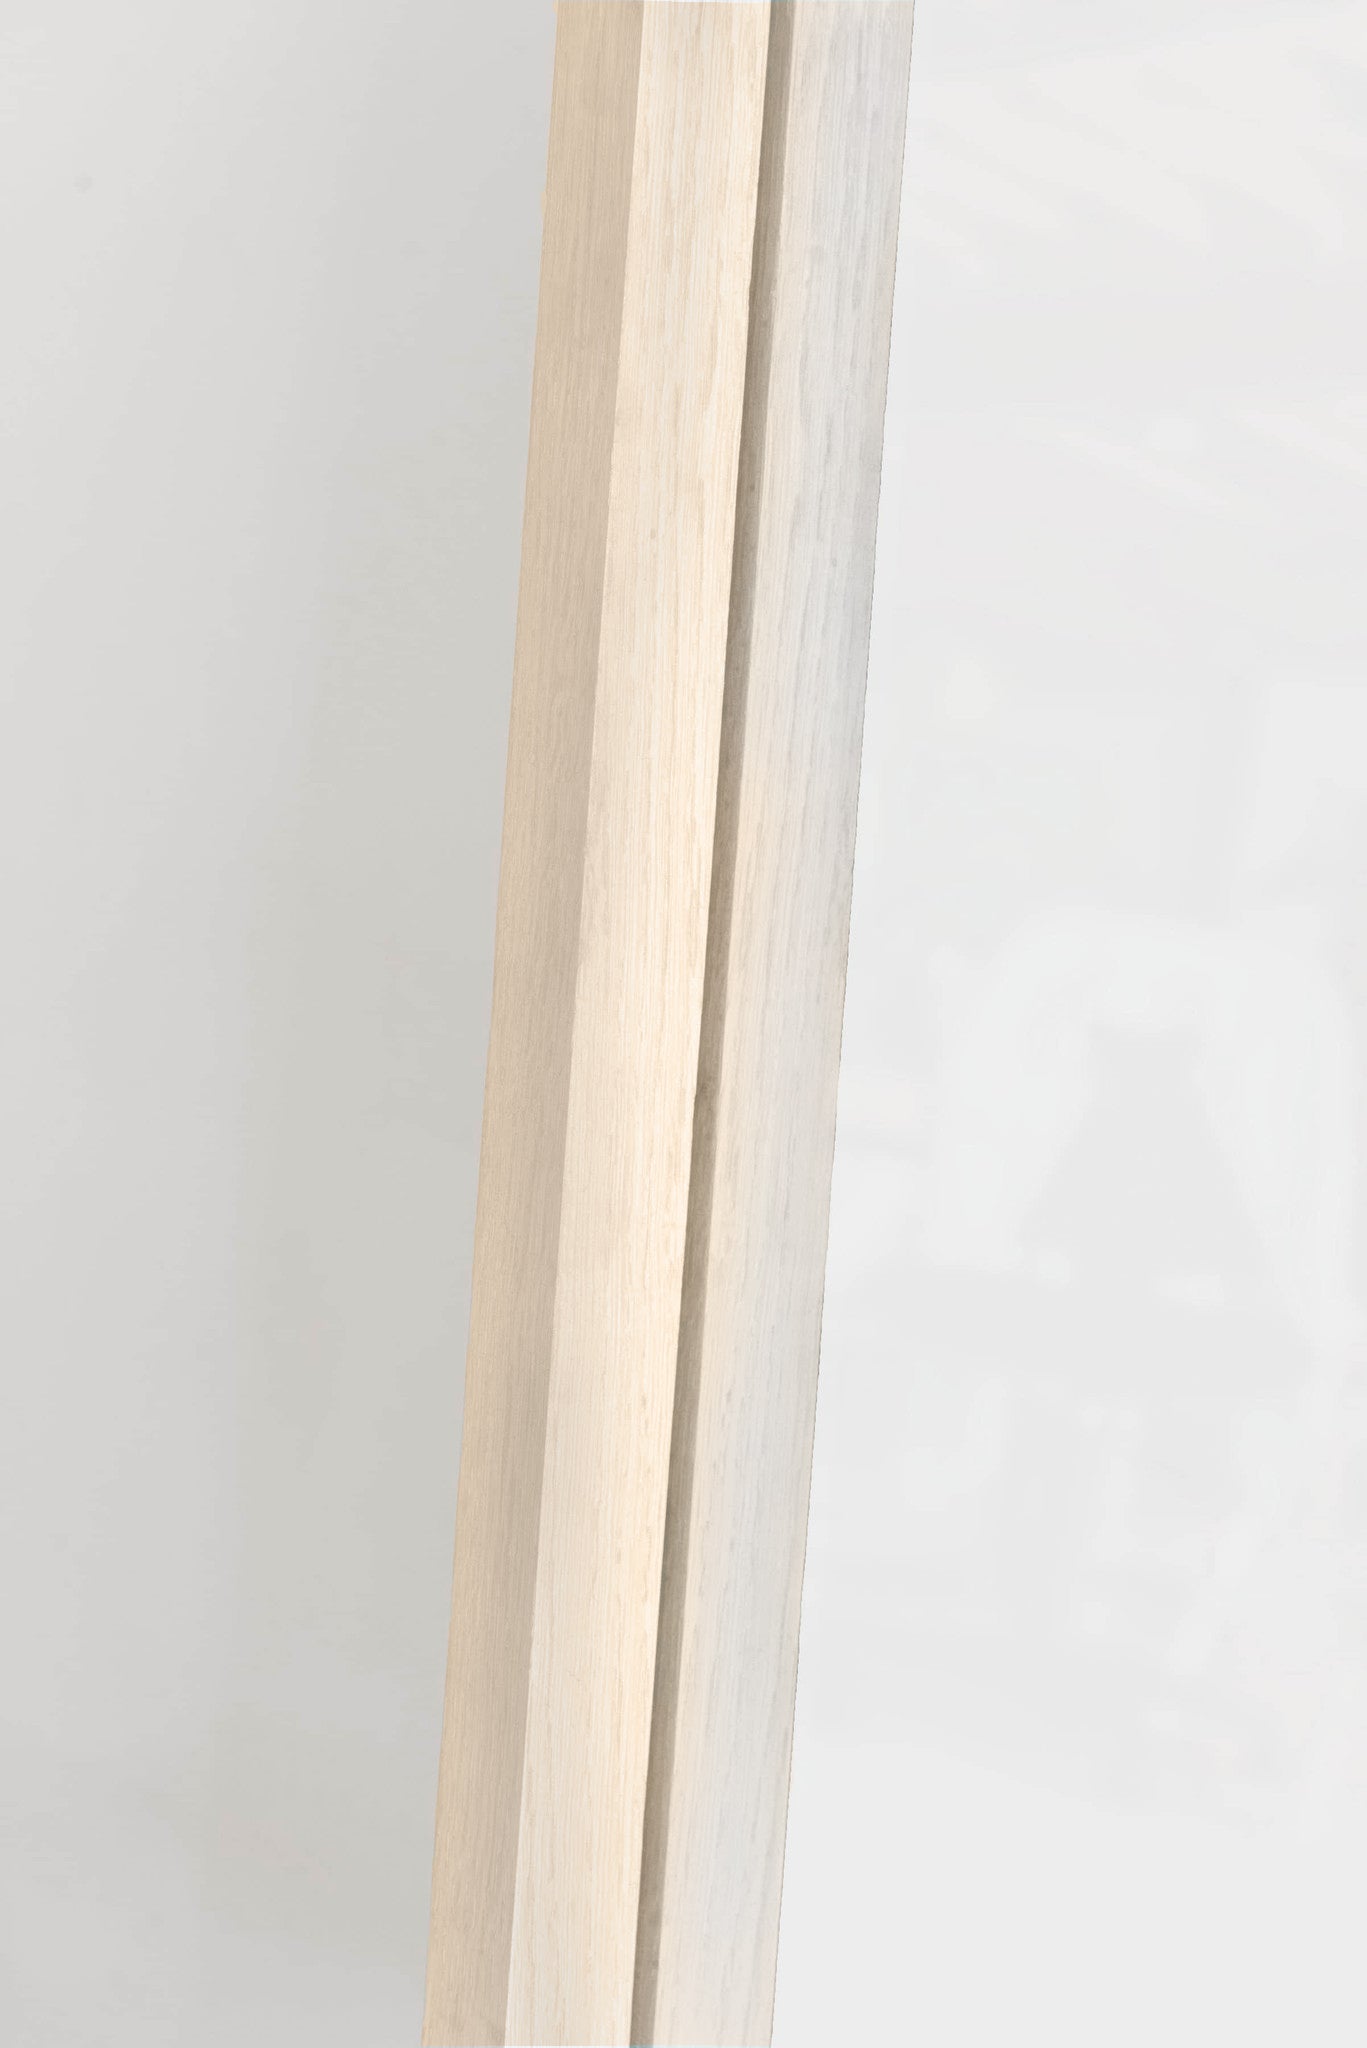 Rivera oak mirror- Oak wood 